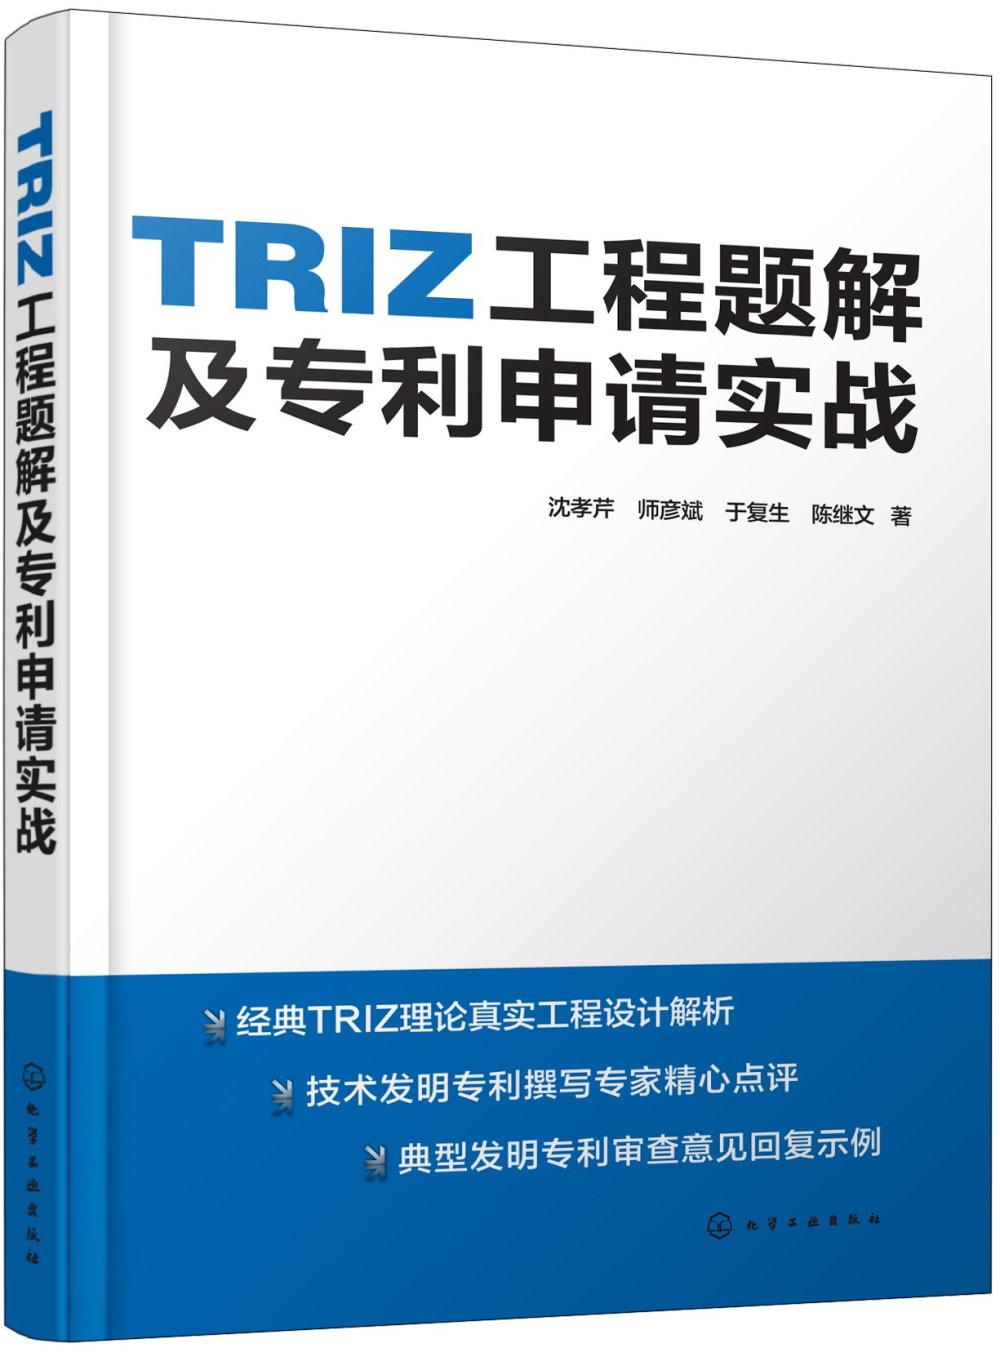 TRIZ工程題解及專利申請實戰